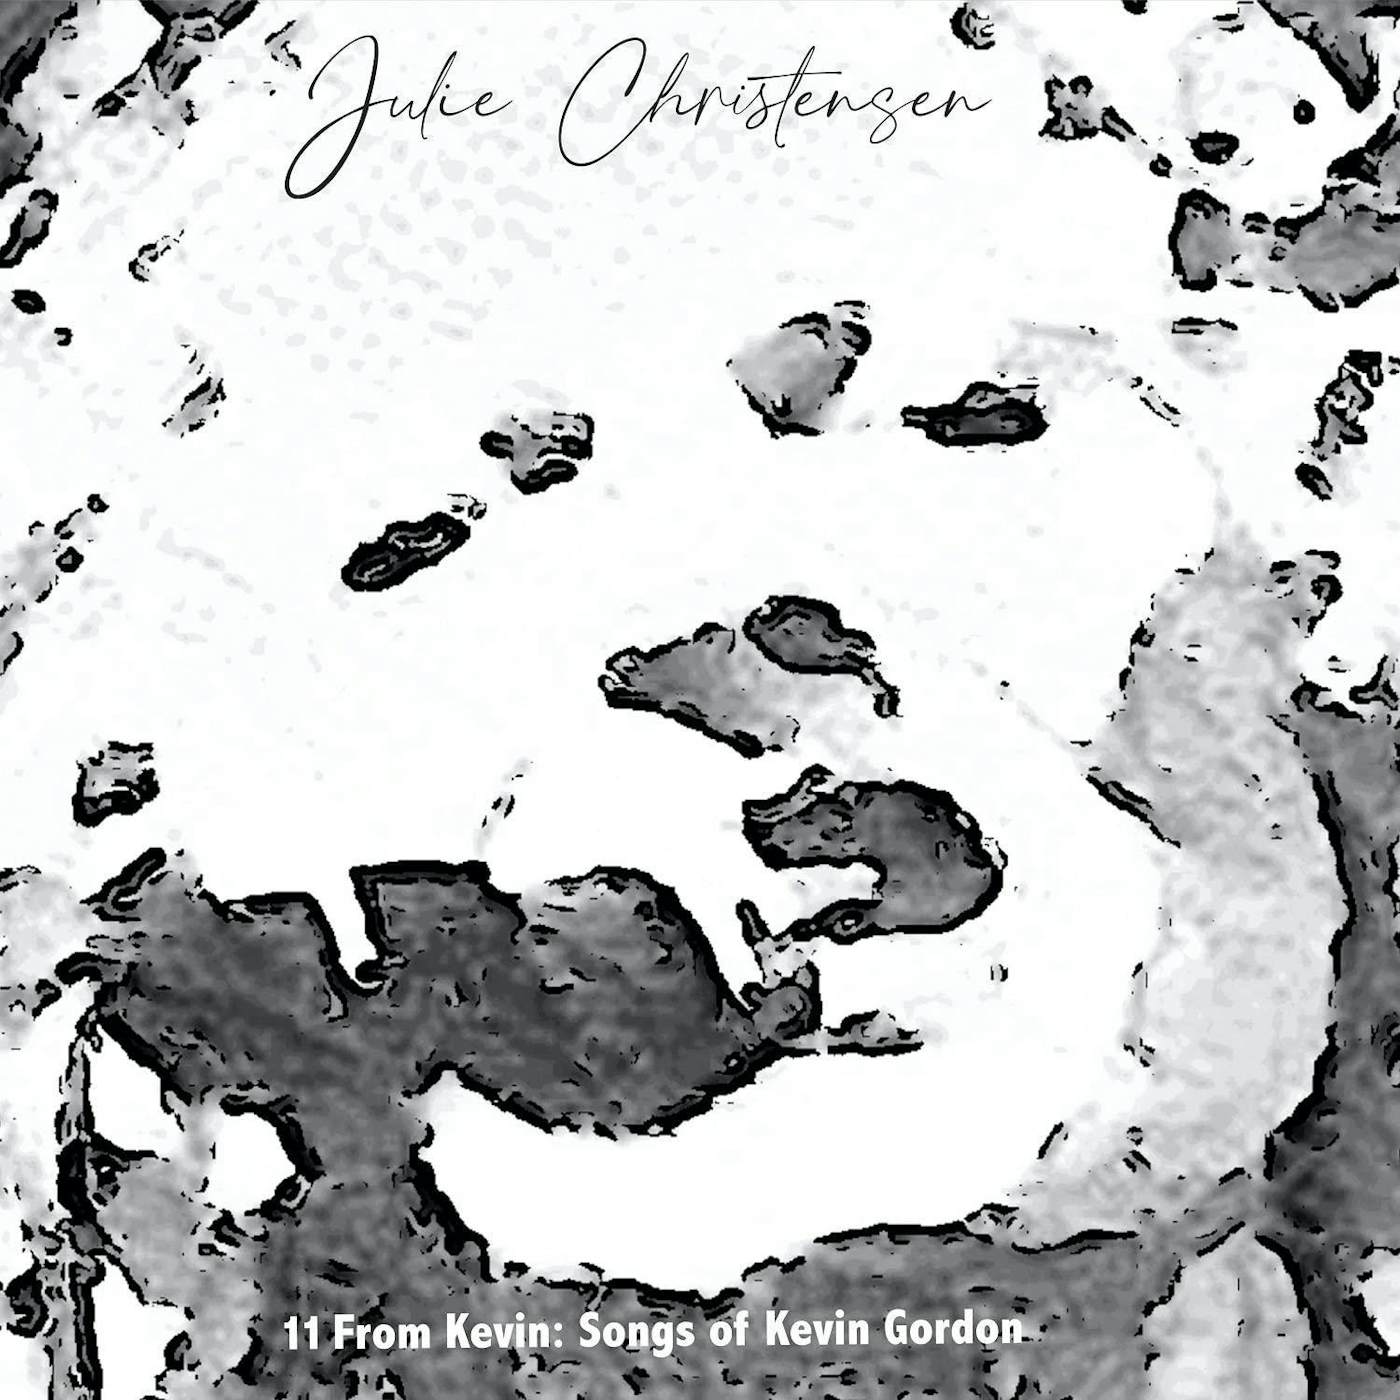 Julie Christensen 11 from Kevin: Songs of Kevin Gordon Vinyl Record